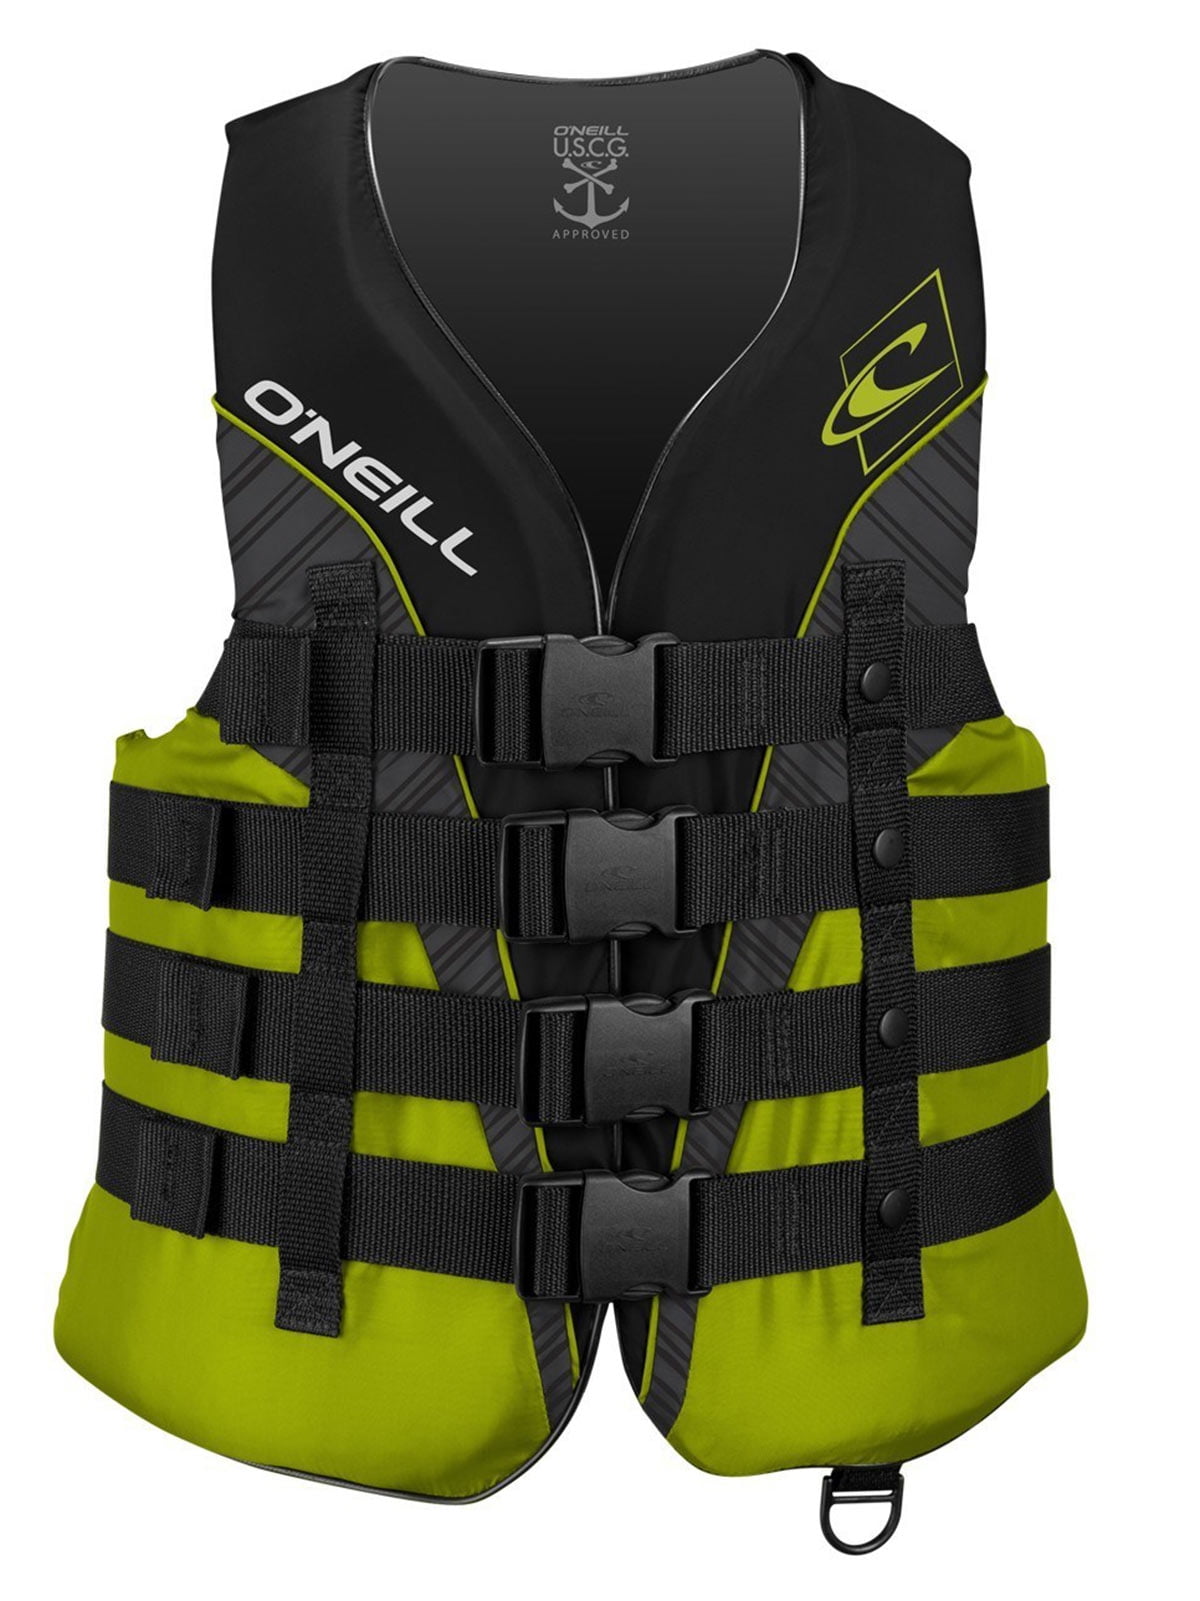 O'Neill mens Superlite USCG life vest 3XL Black stealth (4723 